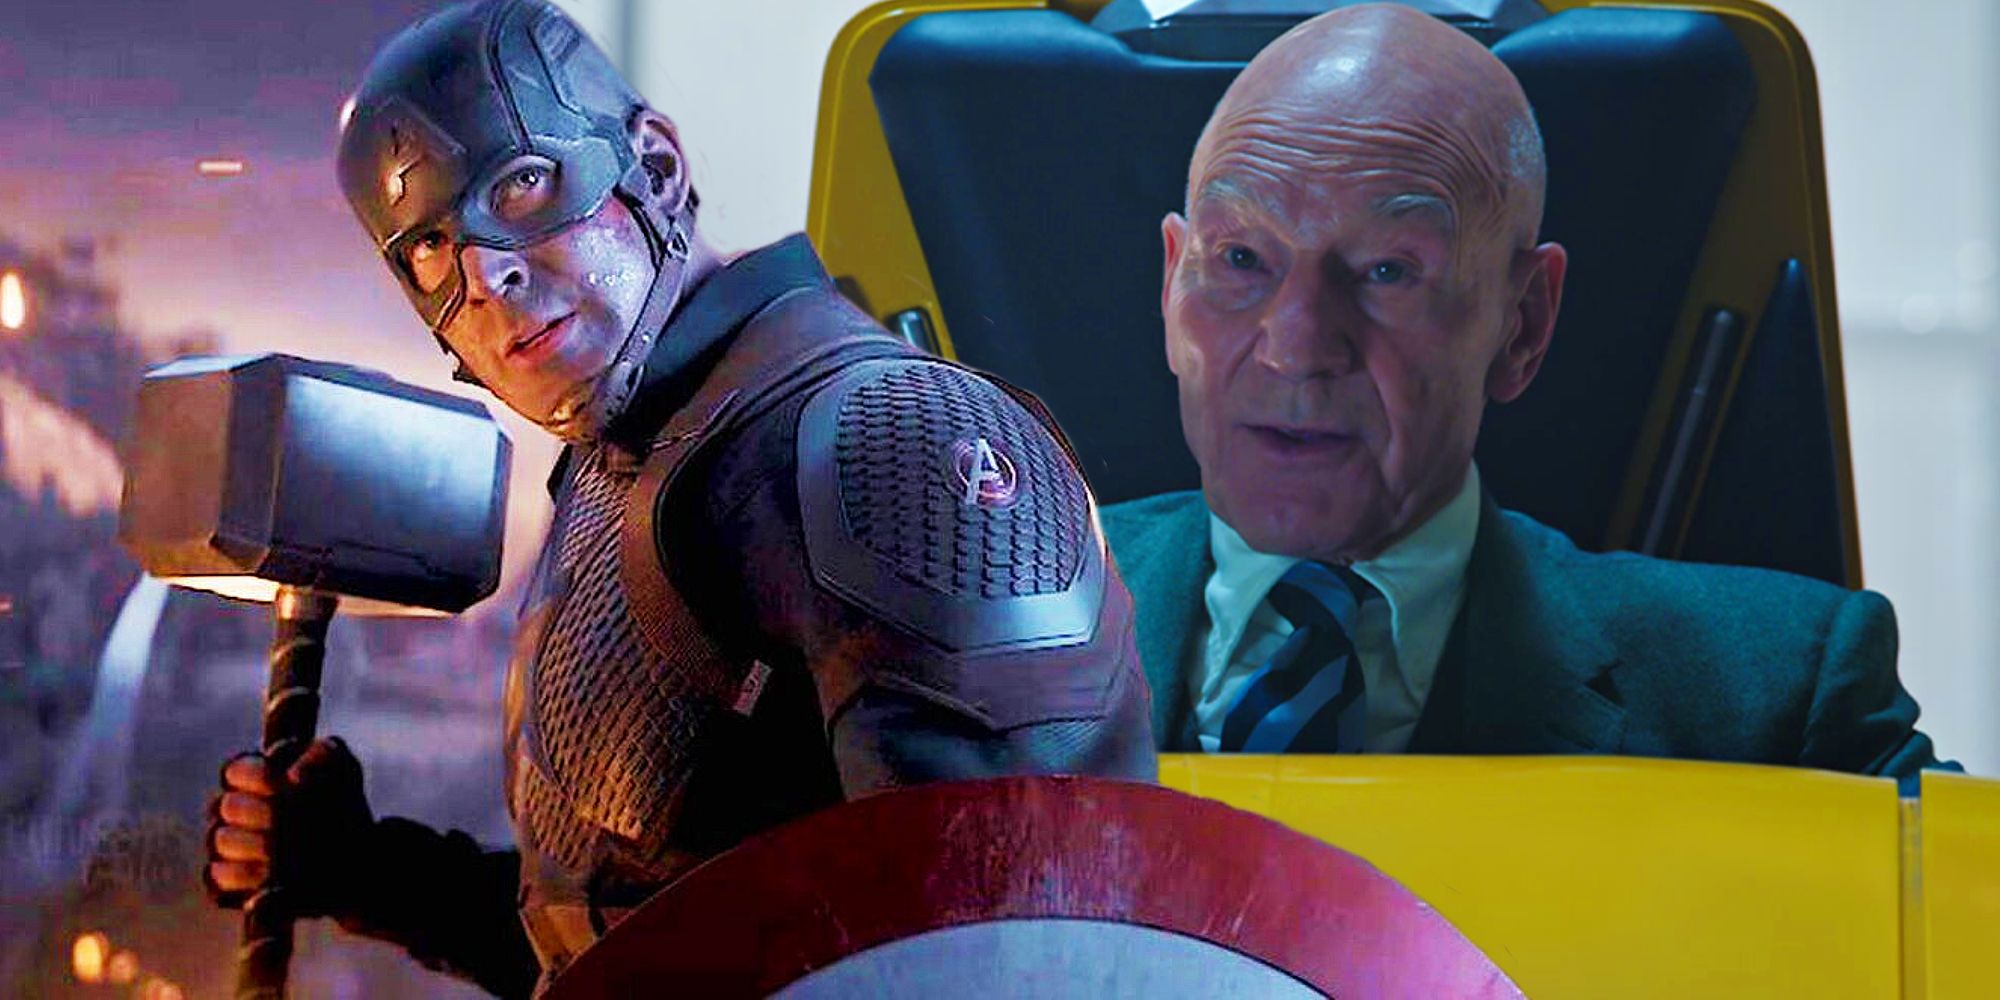 Captain America wielding Mjolnir and Professor X from Dr. Strange 2